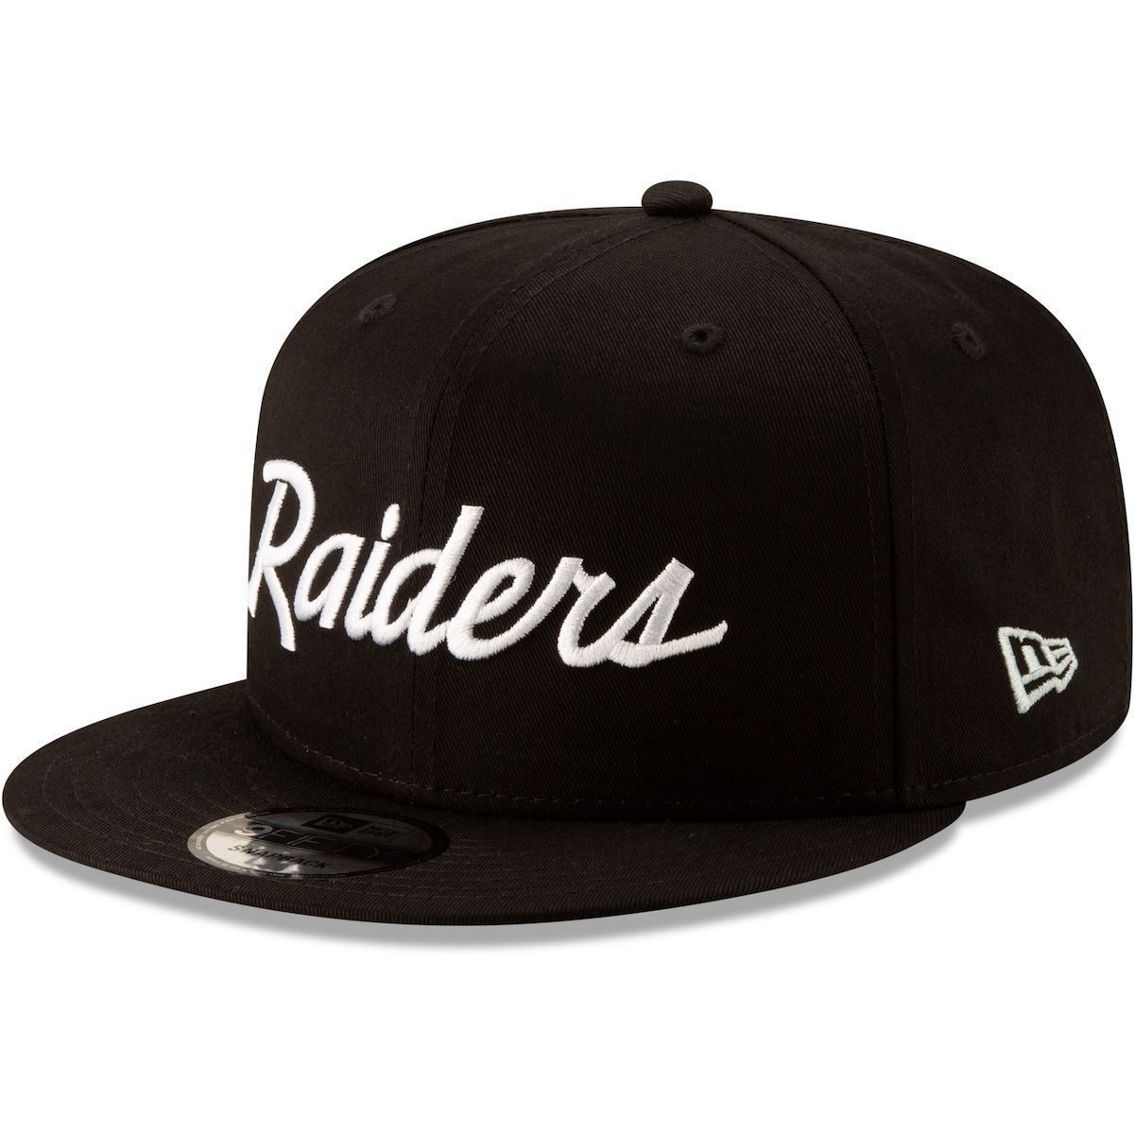 New Era Men's Black Las Vegas Raiders Throwback 9FIFTY Adjustable Snapback Hat - Image 2 of 4